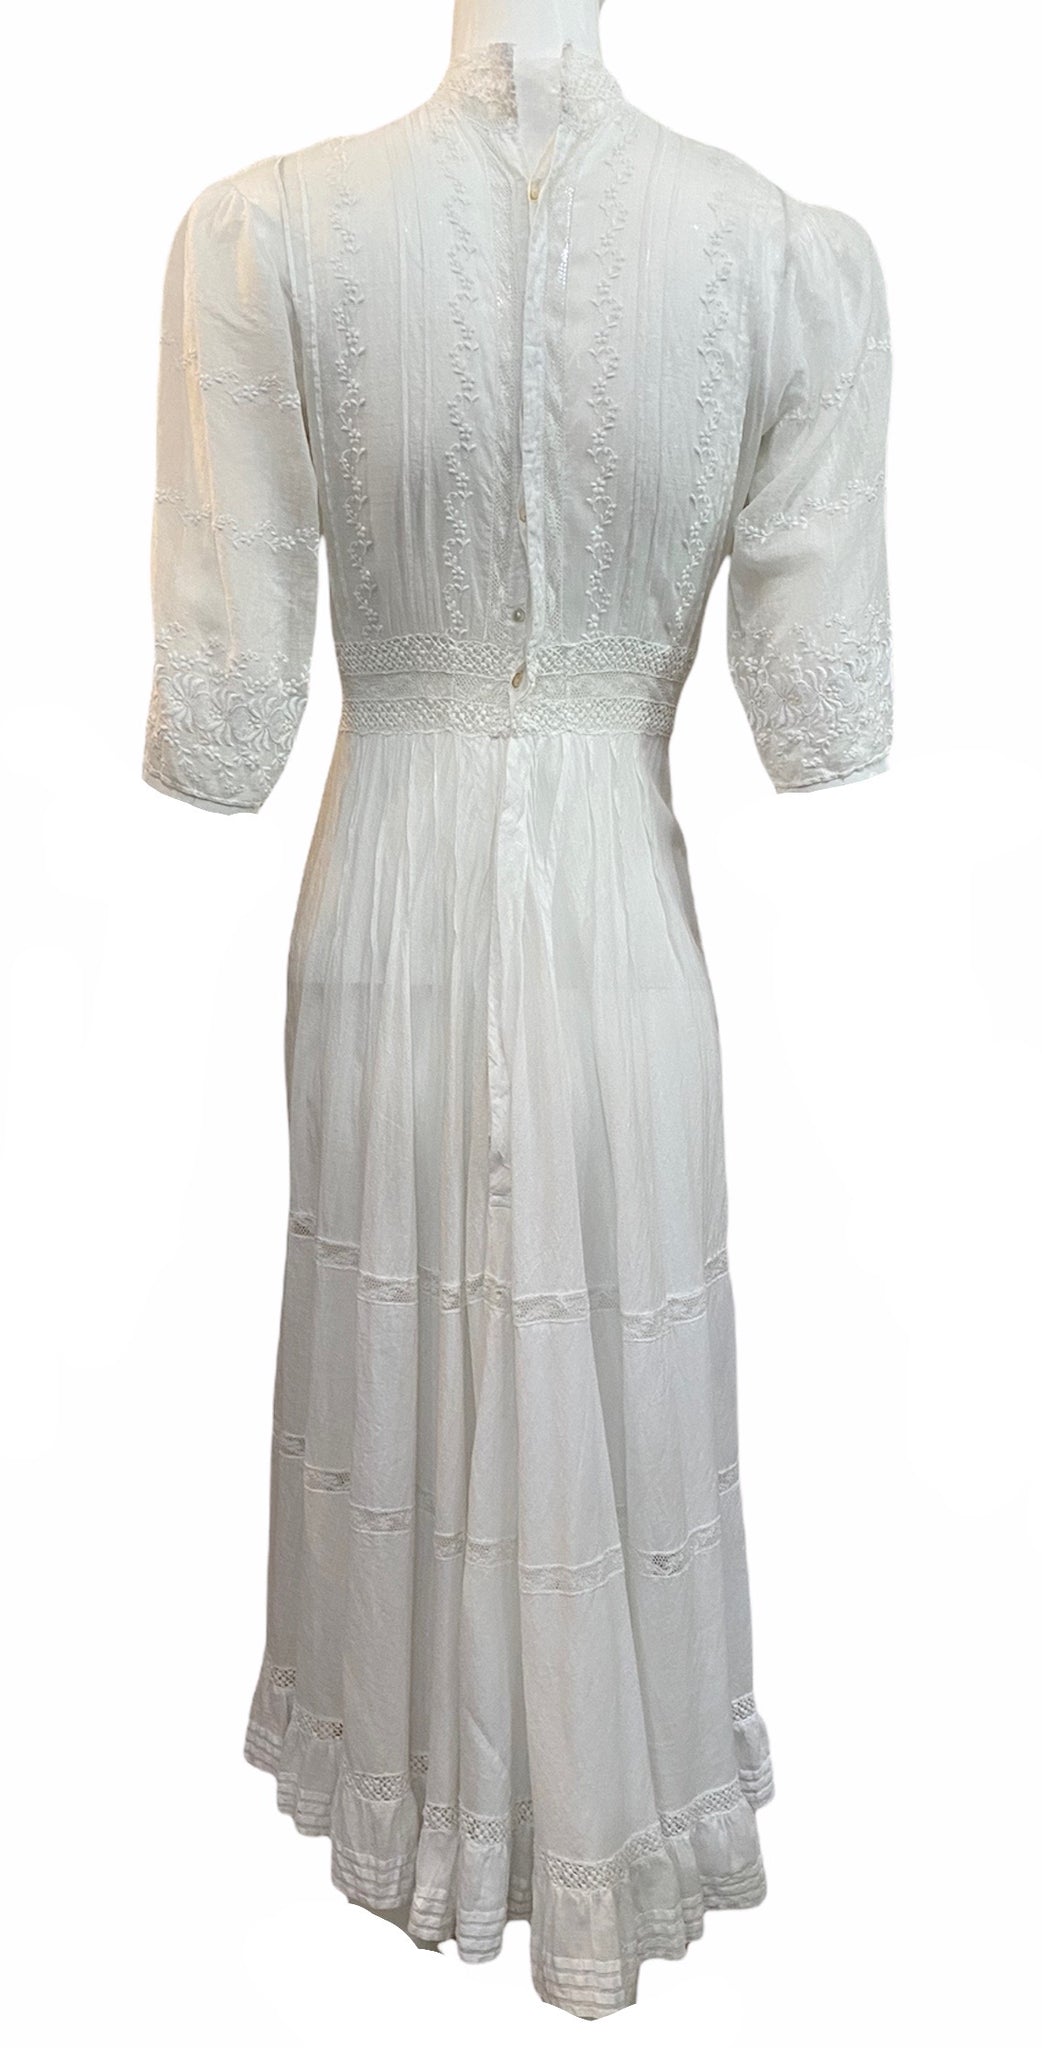 Edwardian White Cotton Voile Short Lawn Dress BACK 2 of 4